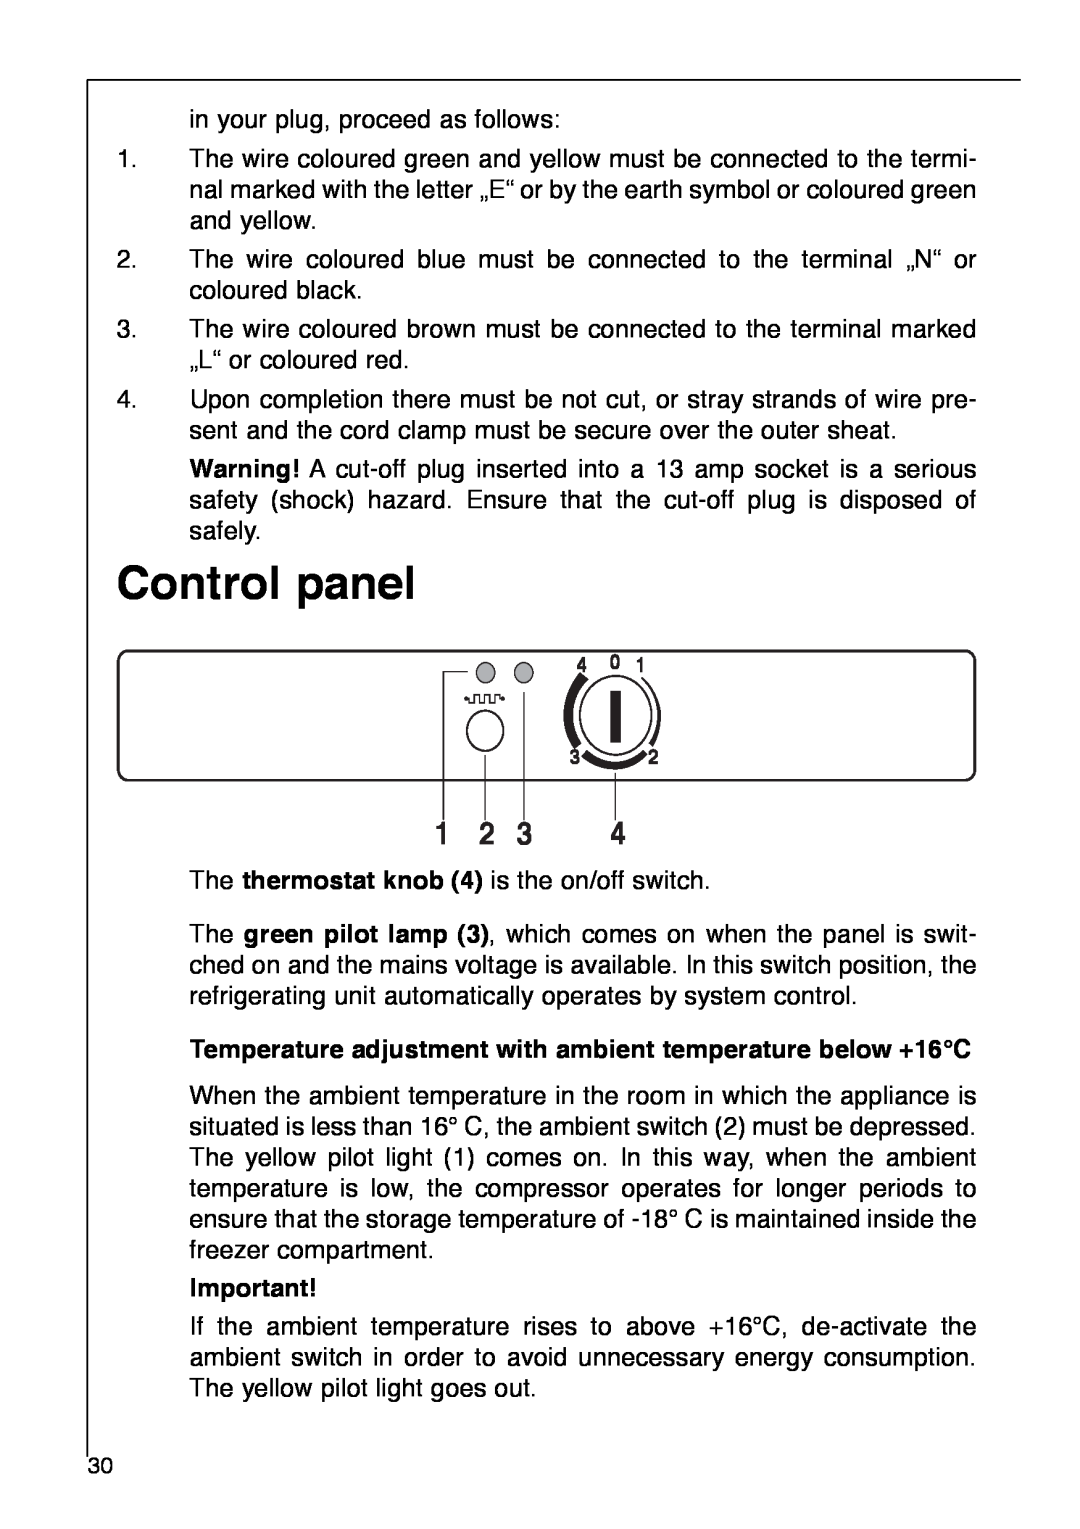 AEG 2642-6 KG manual Control panel, Temperature adjustment with ambient temperature below +16¡C 